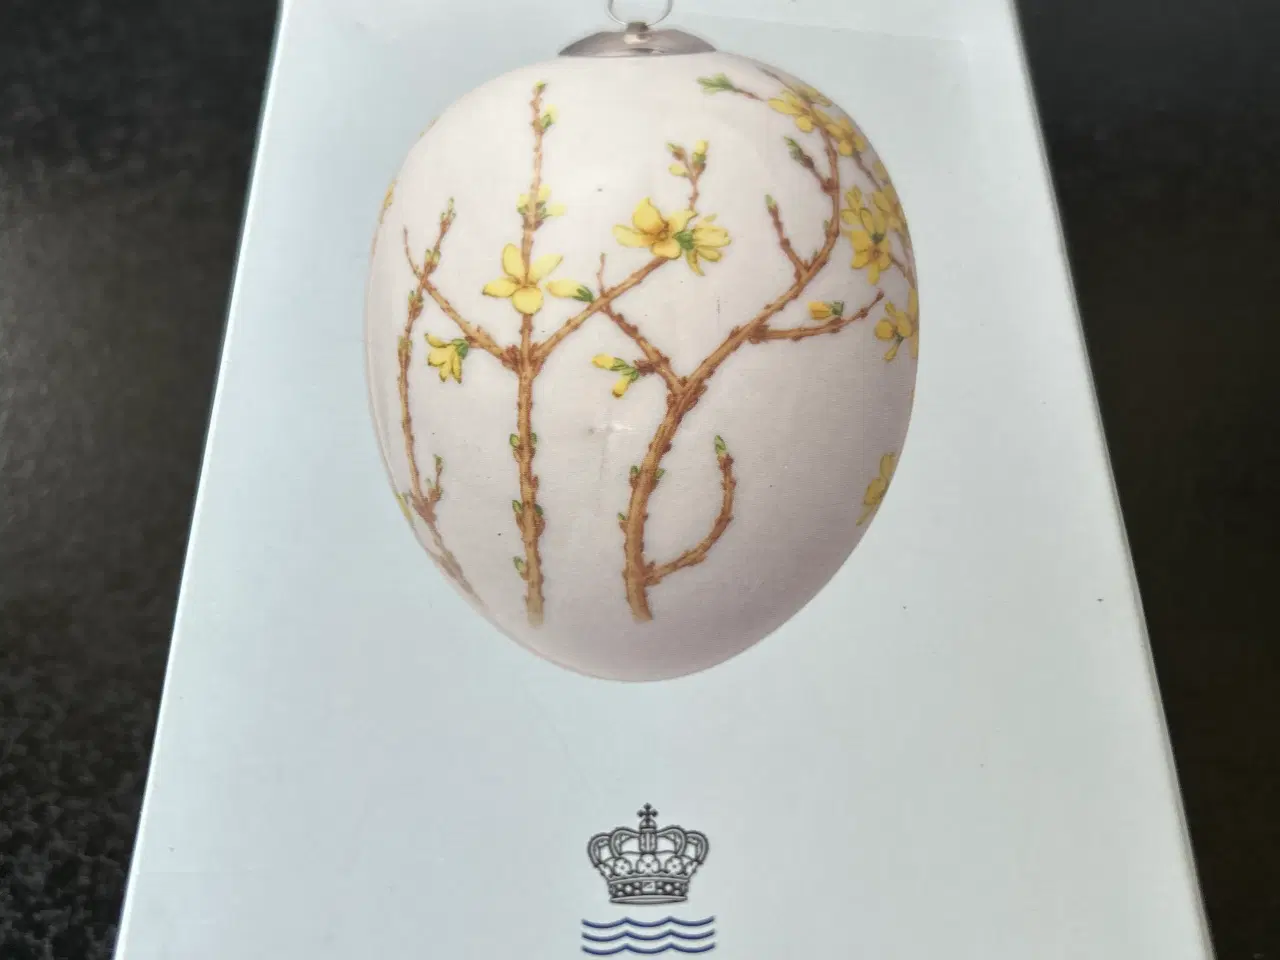 Billede 1 - Royal gåseæg 2018 forsythia mål 10 cm ny 